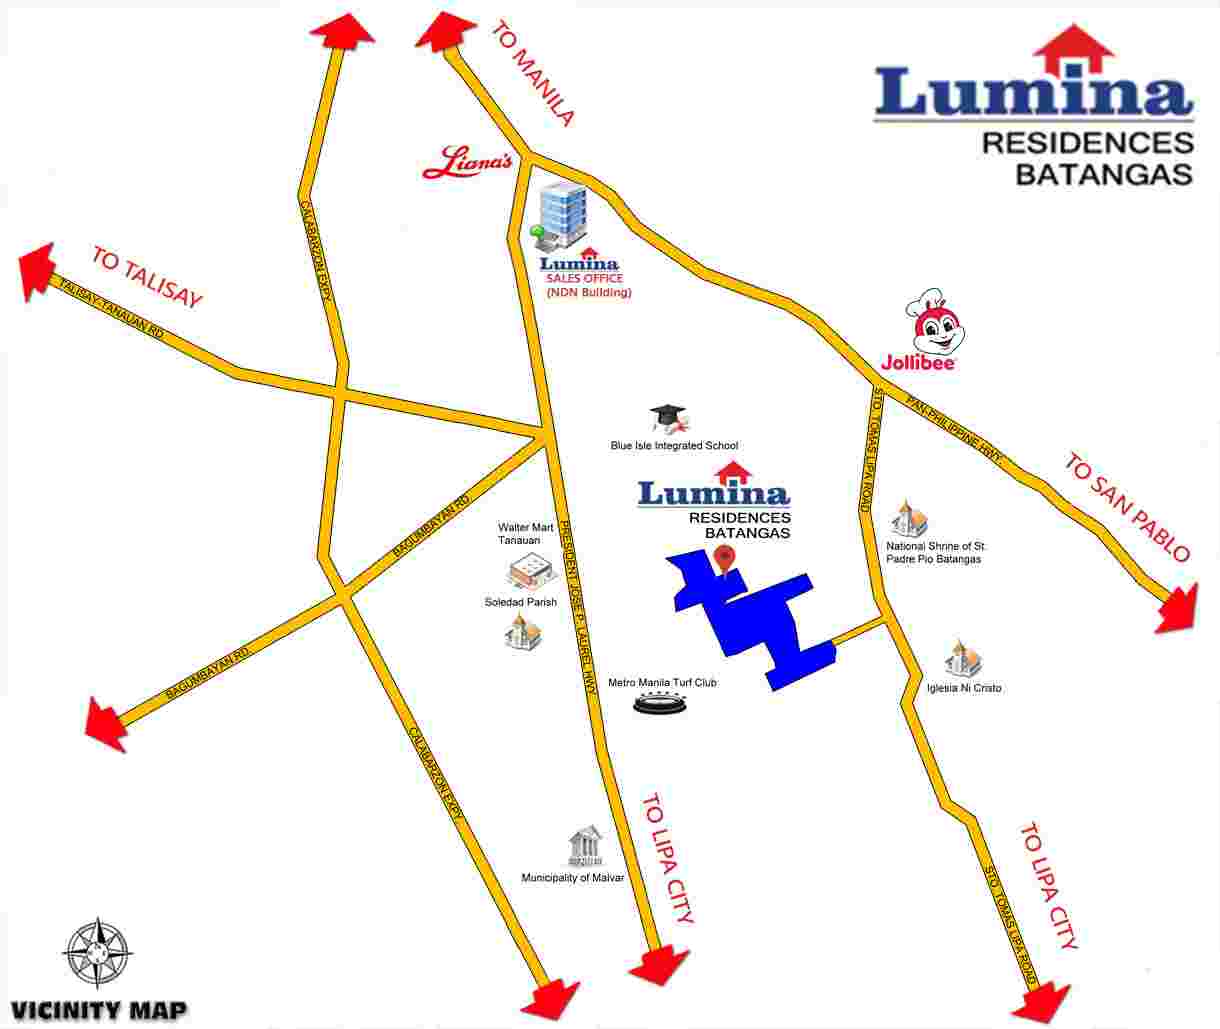 Lumina-Residences-Batangas-Vicinity-Map-revised.jpg